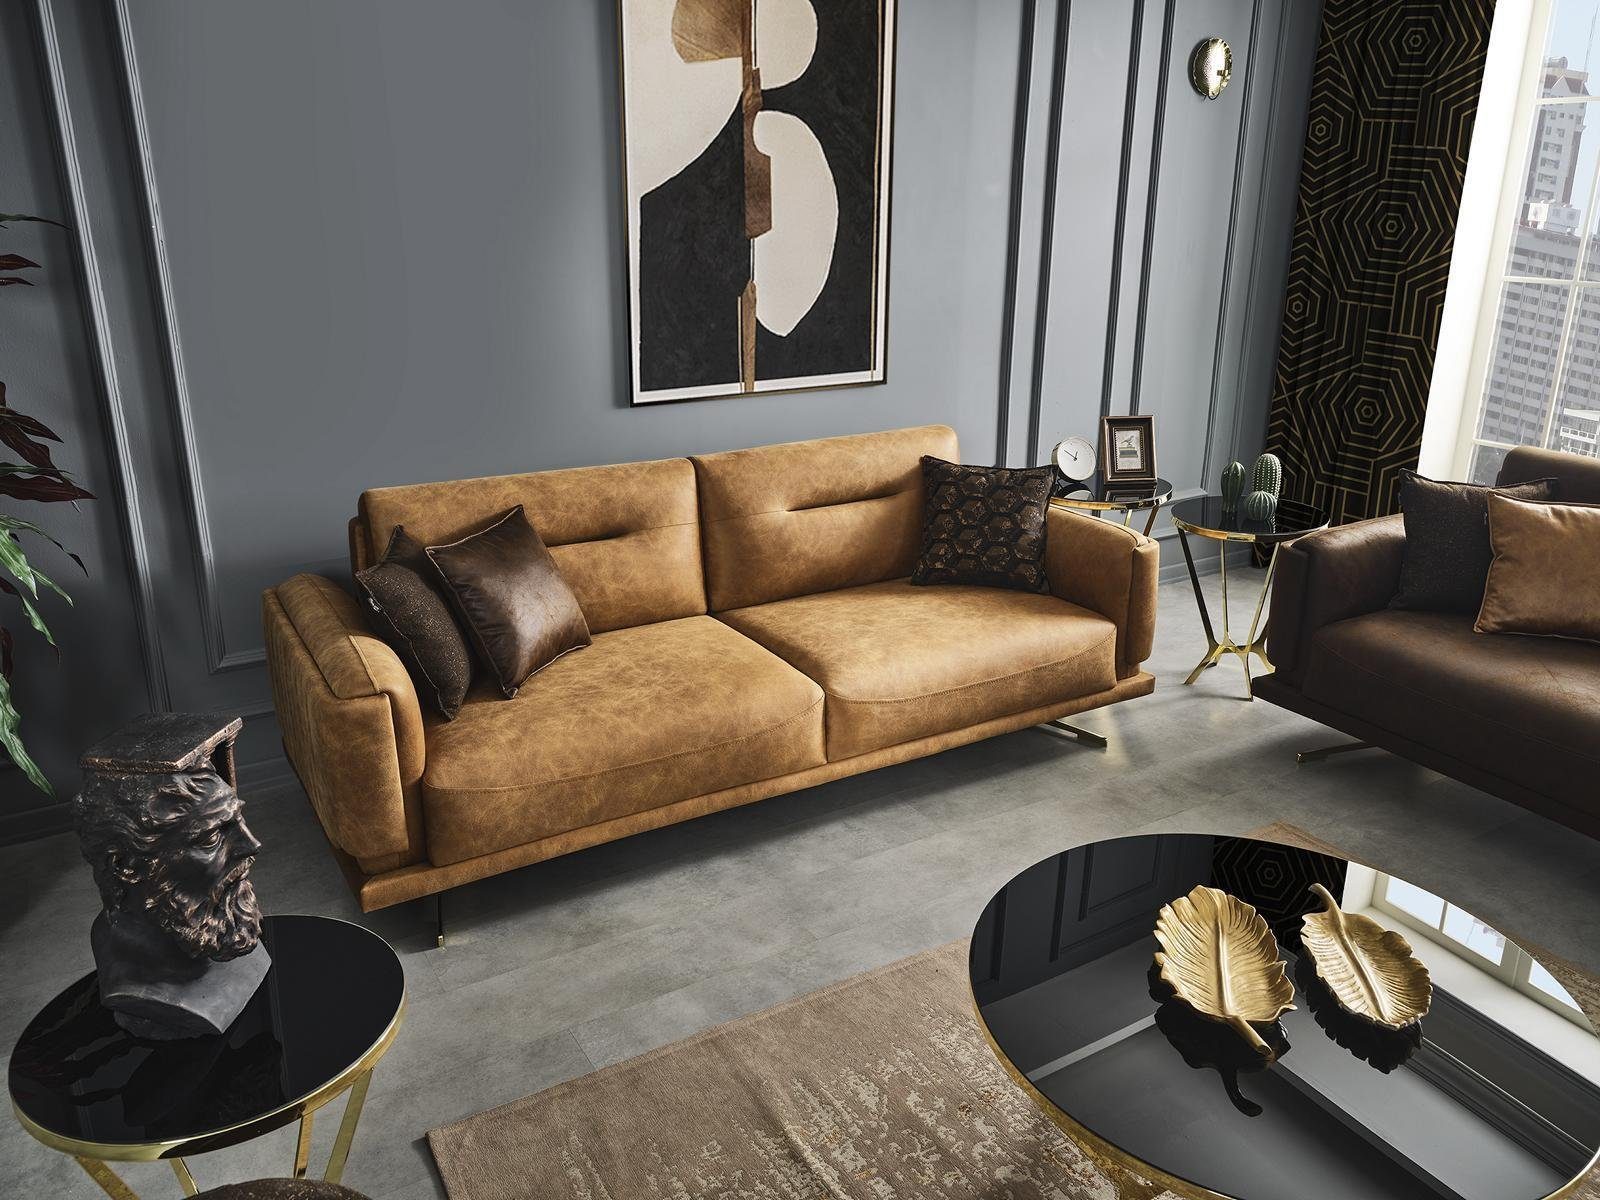 Luxus Neu, Edles Made Stilvolle 1 Design Moderner 3-er Teile, JVmoebel Europe Sofa Möbel Dreisitzer in Beiger